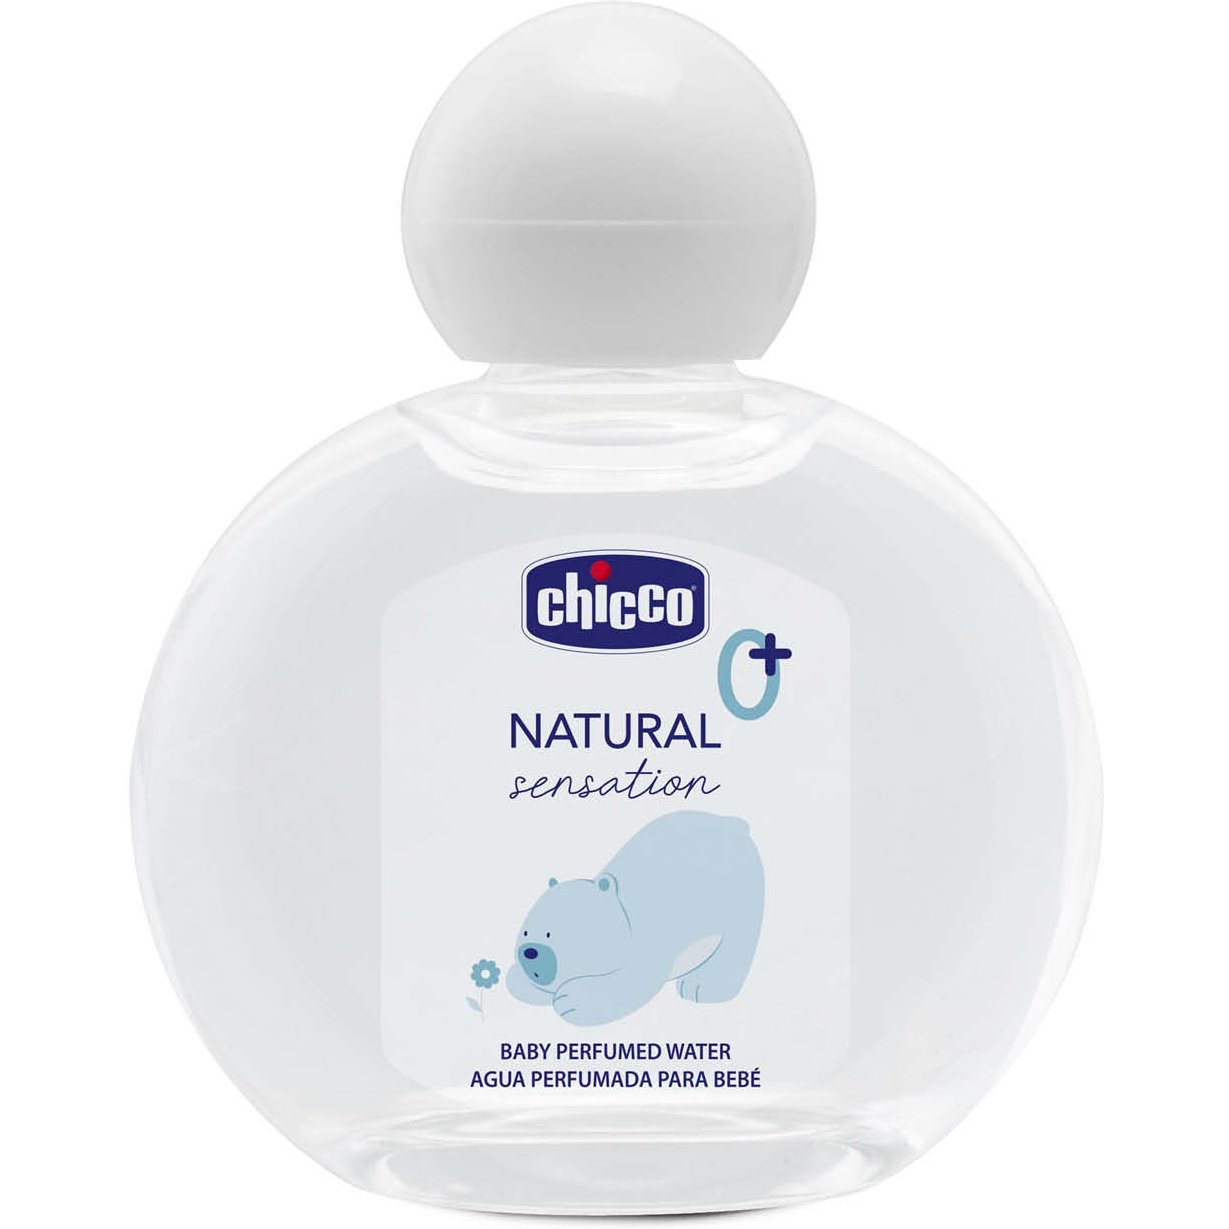 Детская парфюмерная вода Chicco Natural Sensation Baby Perfumed Water 100 мл (11523.00) - фото 1